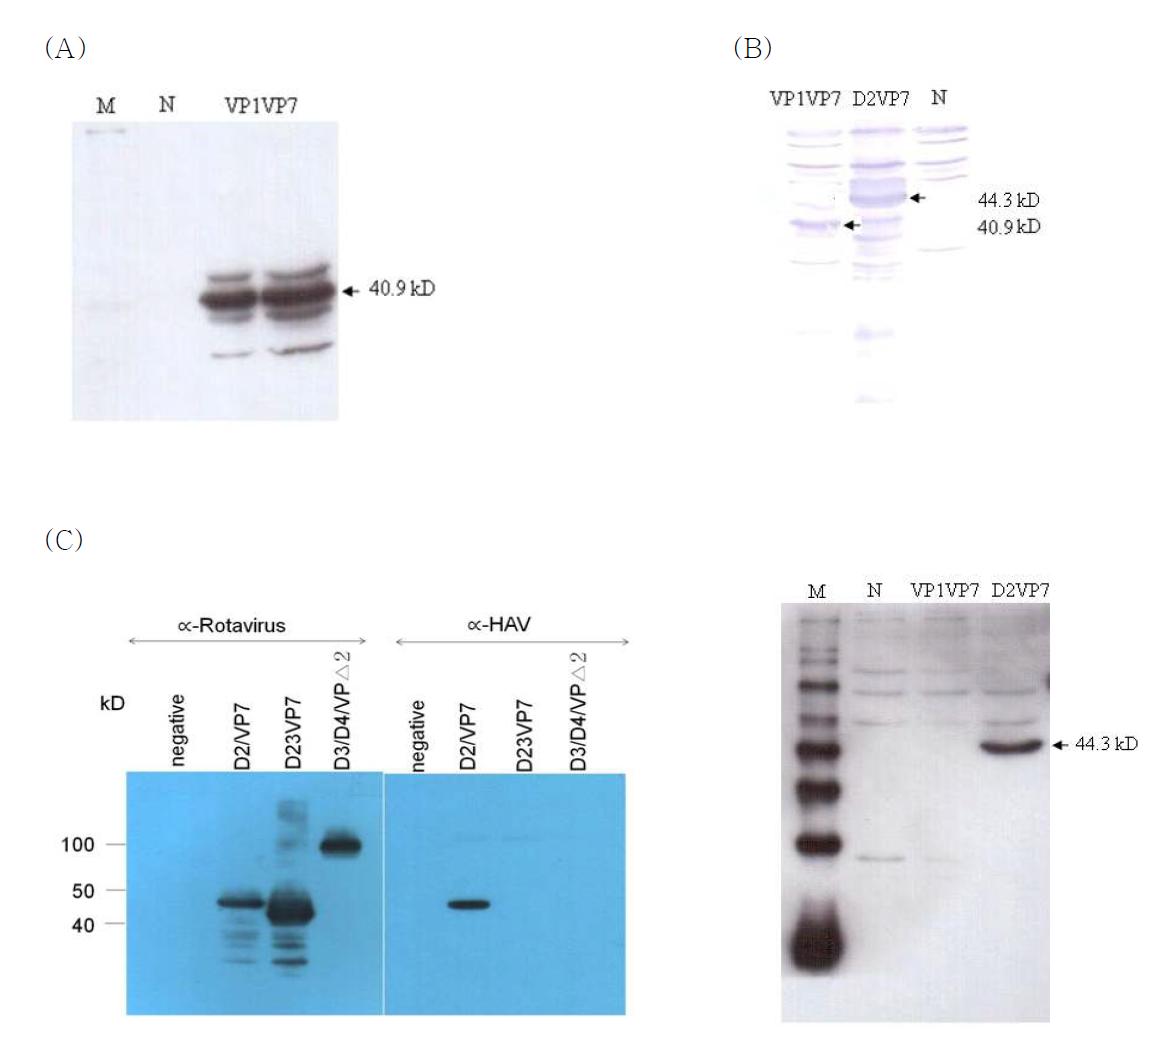 A: 재조합단백질 항원을 개별 항원의 C-말단부위에 발현된 6xHis 에피톱 및 V5 에피톱에 대한 단클론항체를 이용한 Western blot 기법으로 검출하였음. 화살표는 해당 재조합단백질 항원을 암시함. B: western blot 방법을 이용한 로타바이러스와 A형 간염바이러스 감염 토끼 혈청에 대한 재조합단백질의 면역원성 분석; C: VP1VP7과 D2VP7에 대한 A형 간염바이러스에 감염된 환자의 혈청 면역원성 분석결과